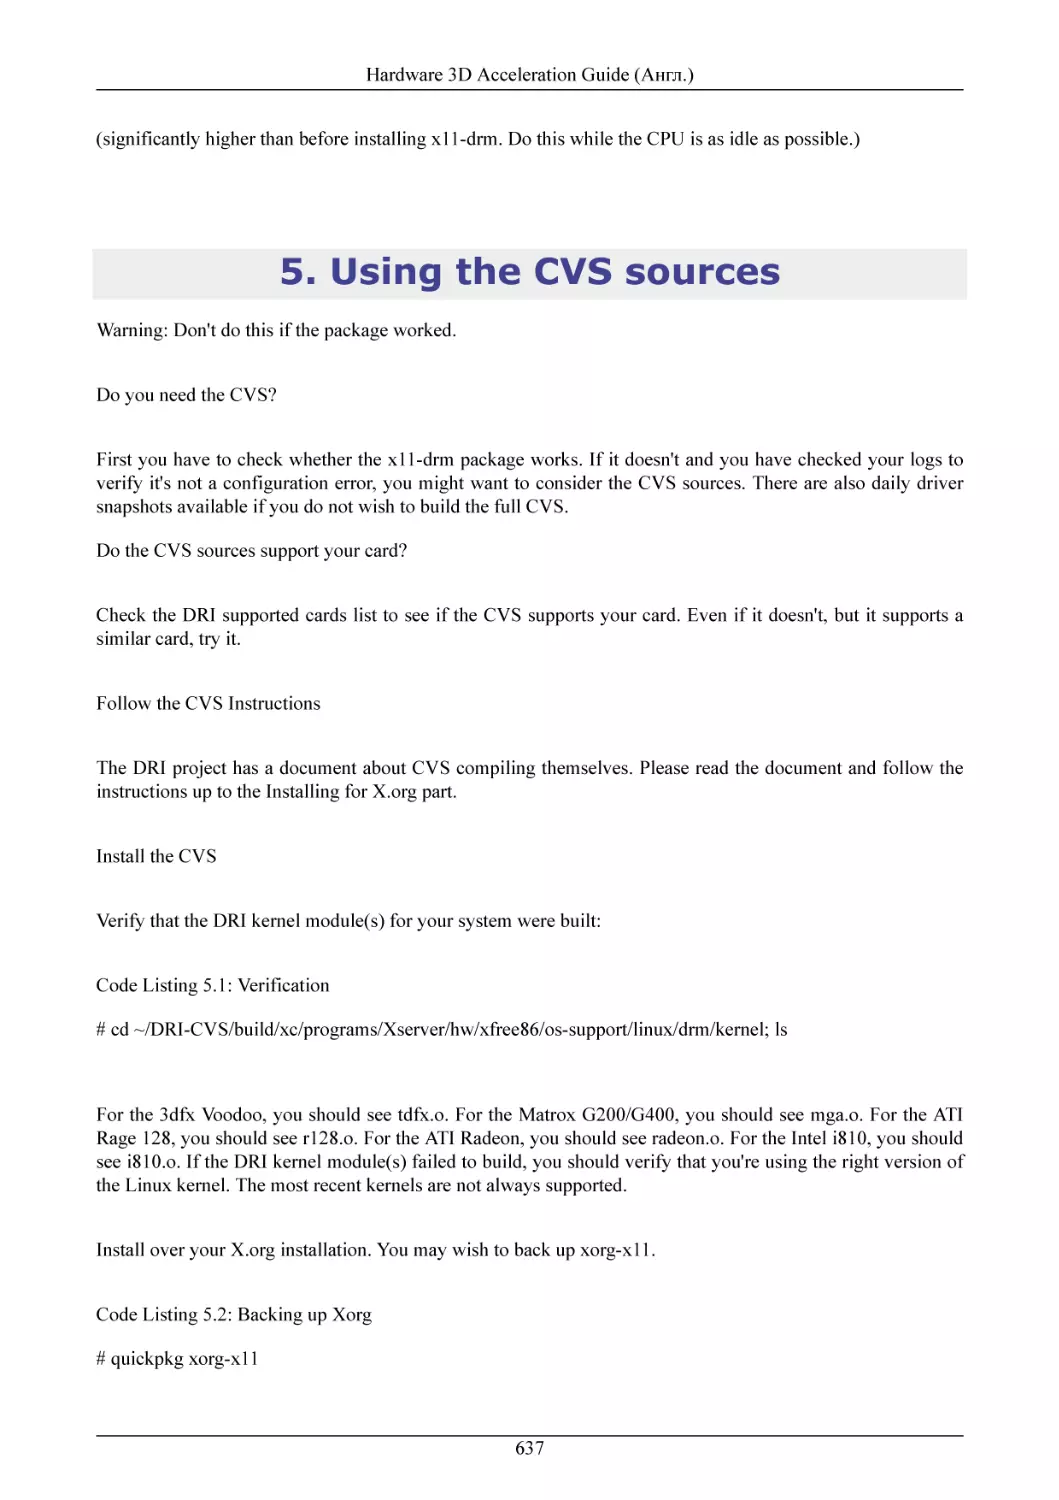 Using the CVS sources